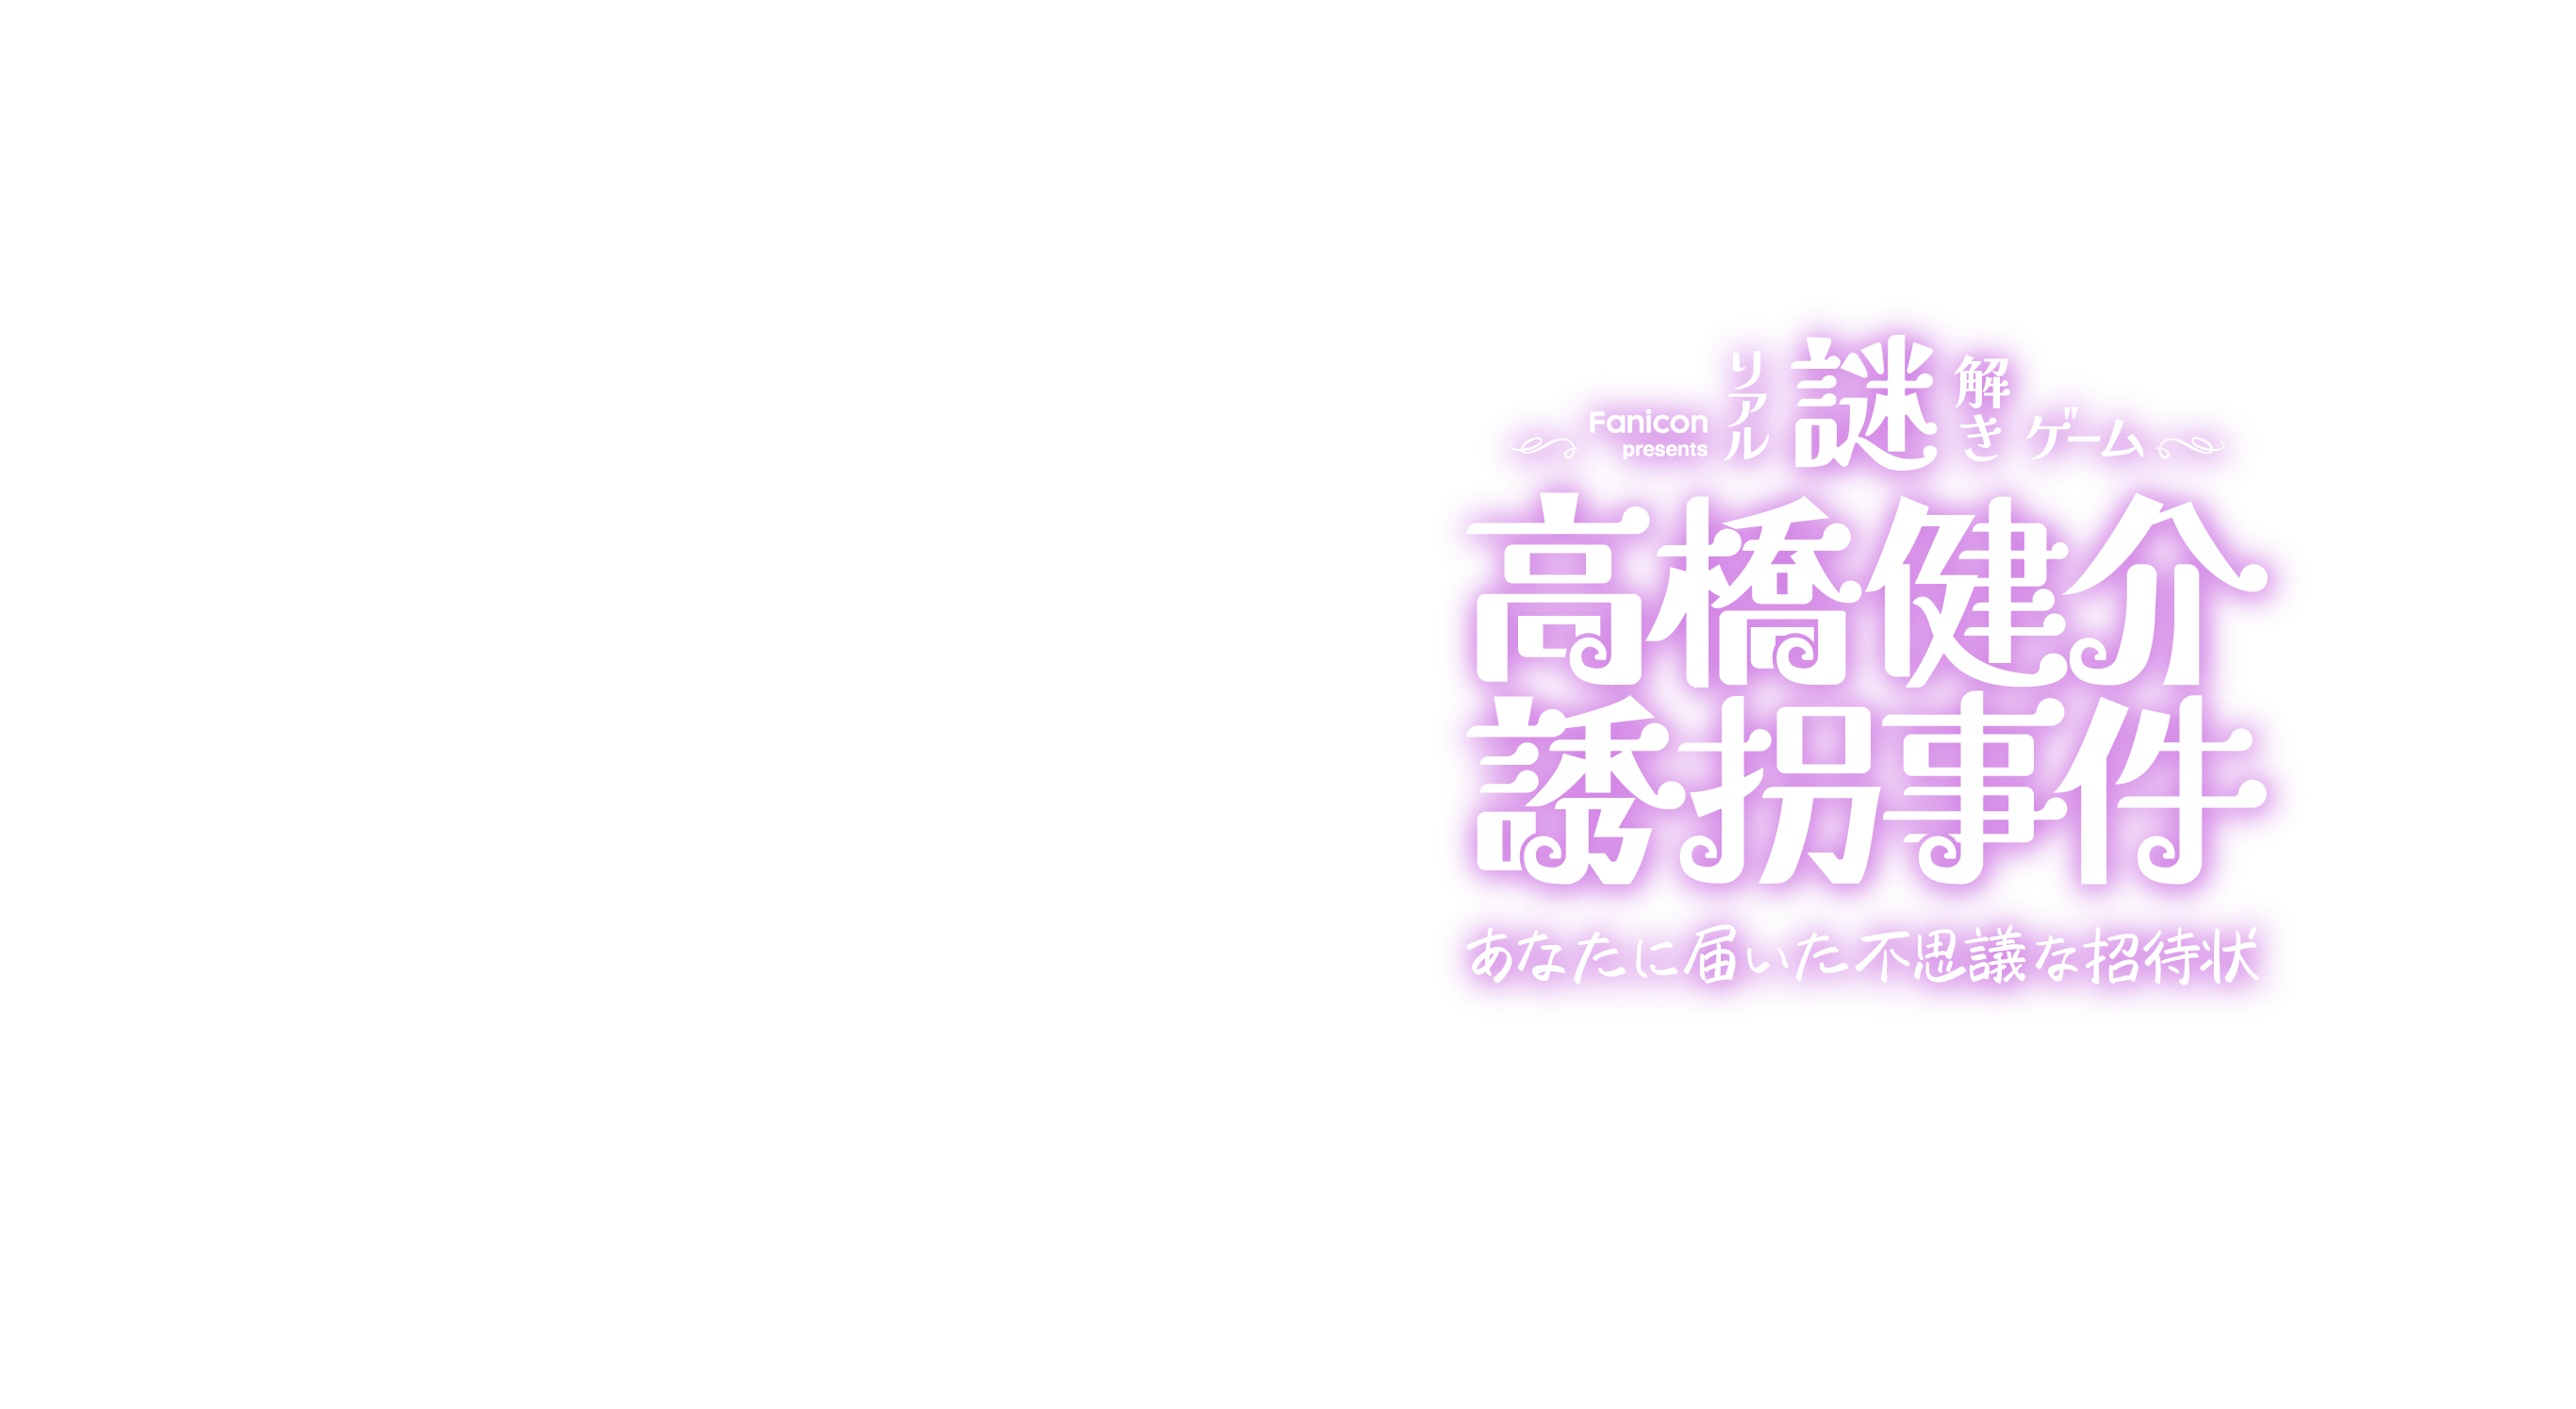 Fanicon Presents リアル謎解きゲーム「高橋健介誘拐事件〜あなたに届いた不思議な招待状〜」 